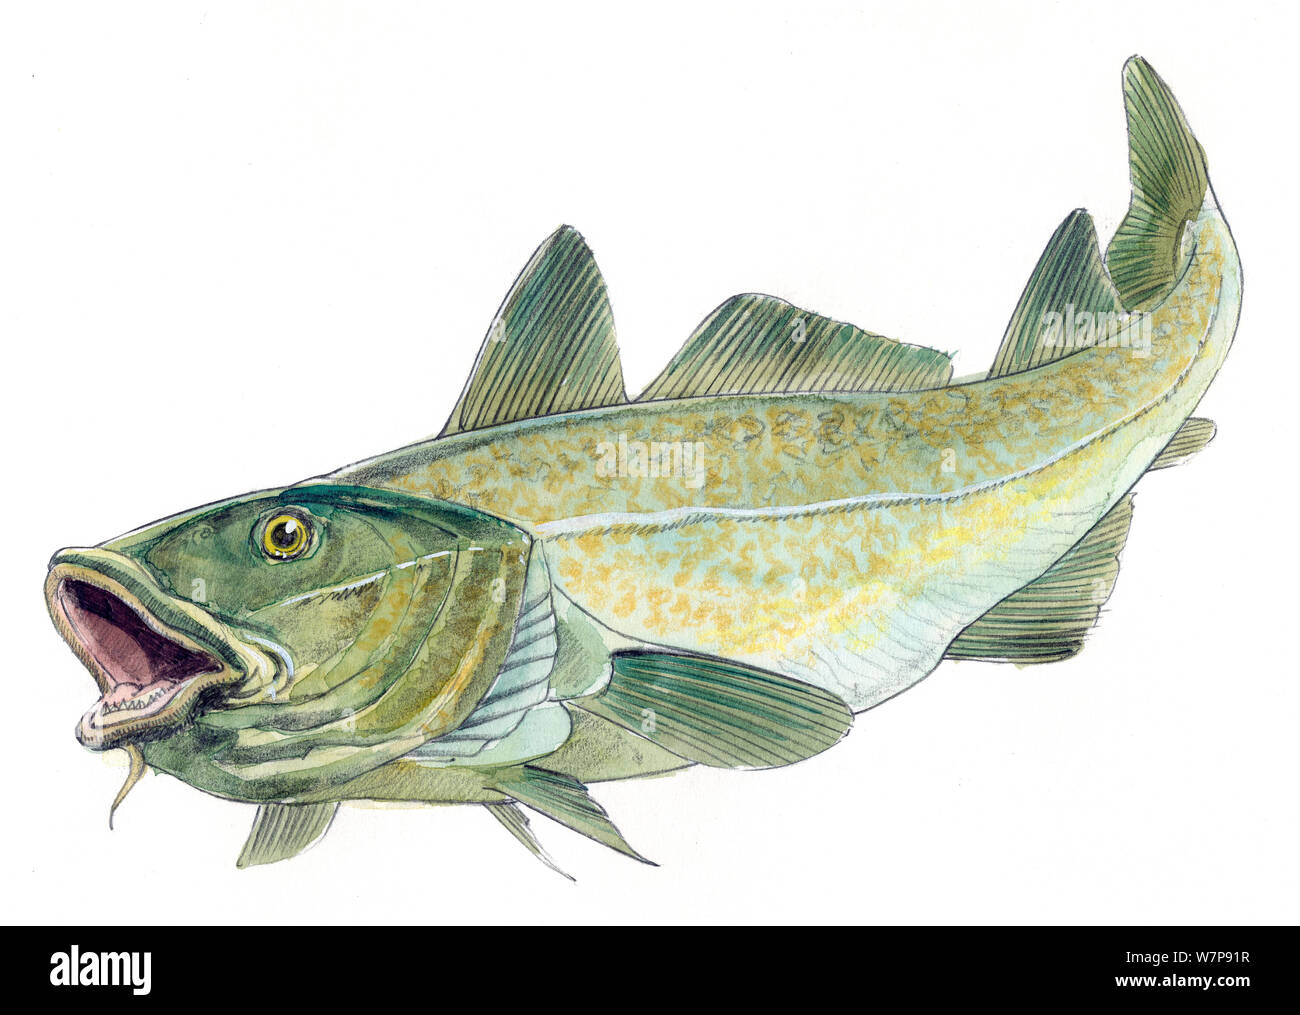 Illustration of Atlantic Cod (Gadus morhua). Pencil and watercolor painting. Stock Photo